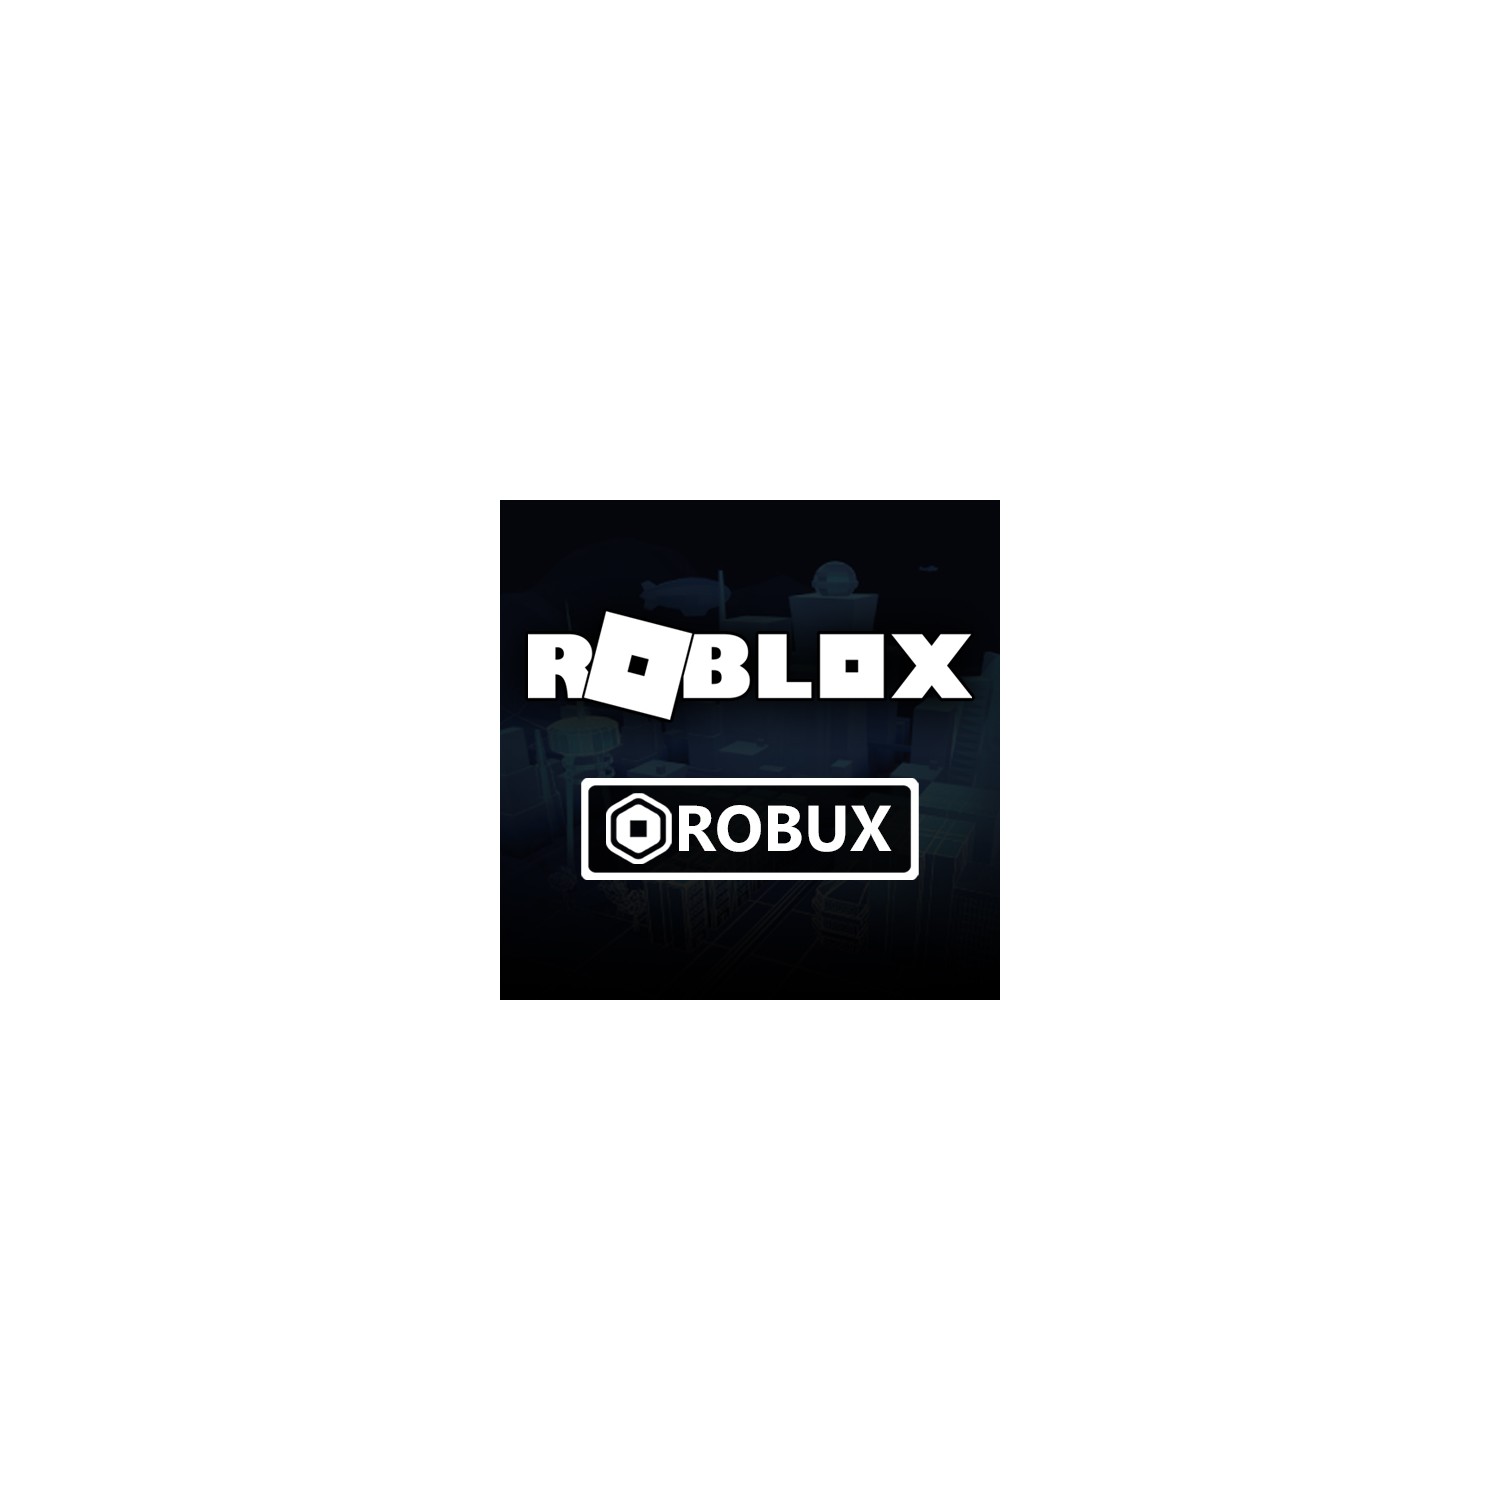 Roblox 800 Robux Fiyati Taksit Secenekleri Ile Satin Al - ucuz robux 80 robux alma